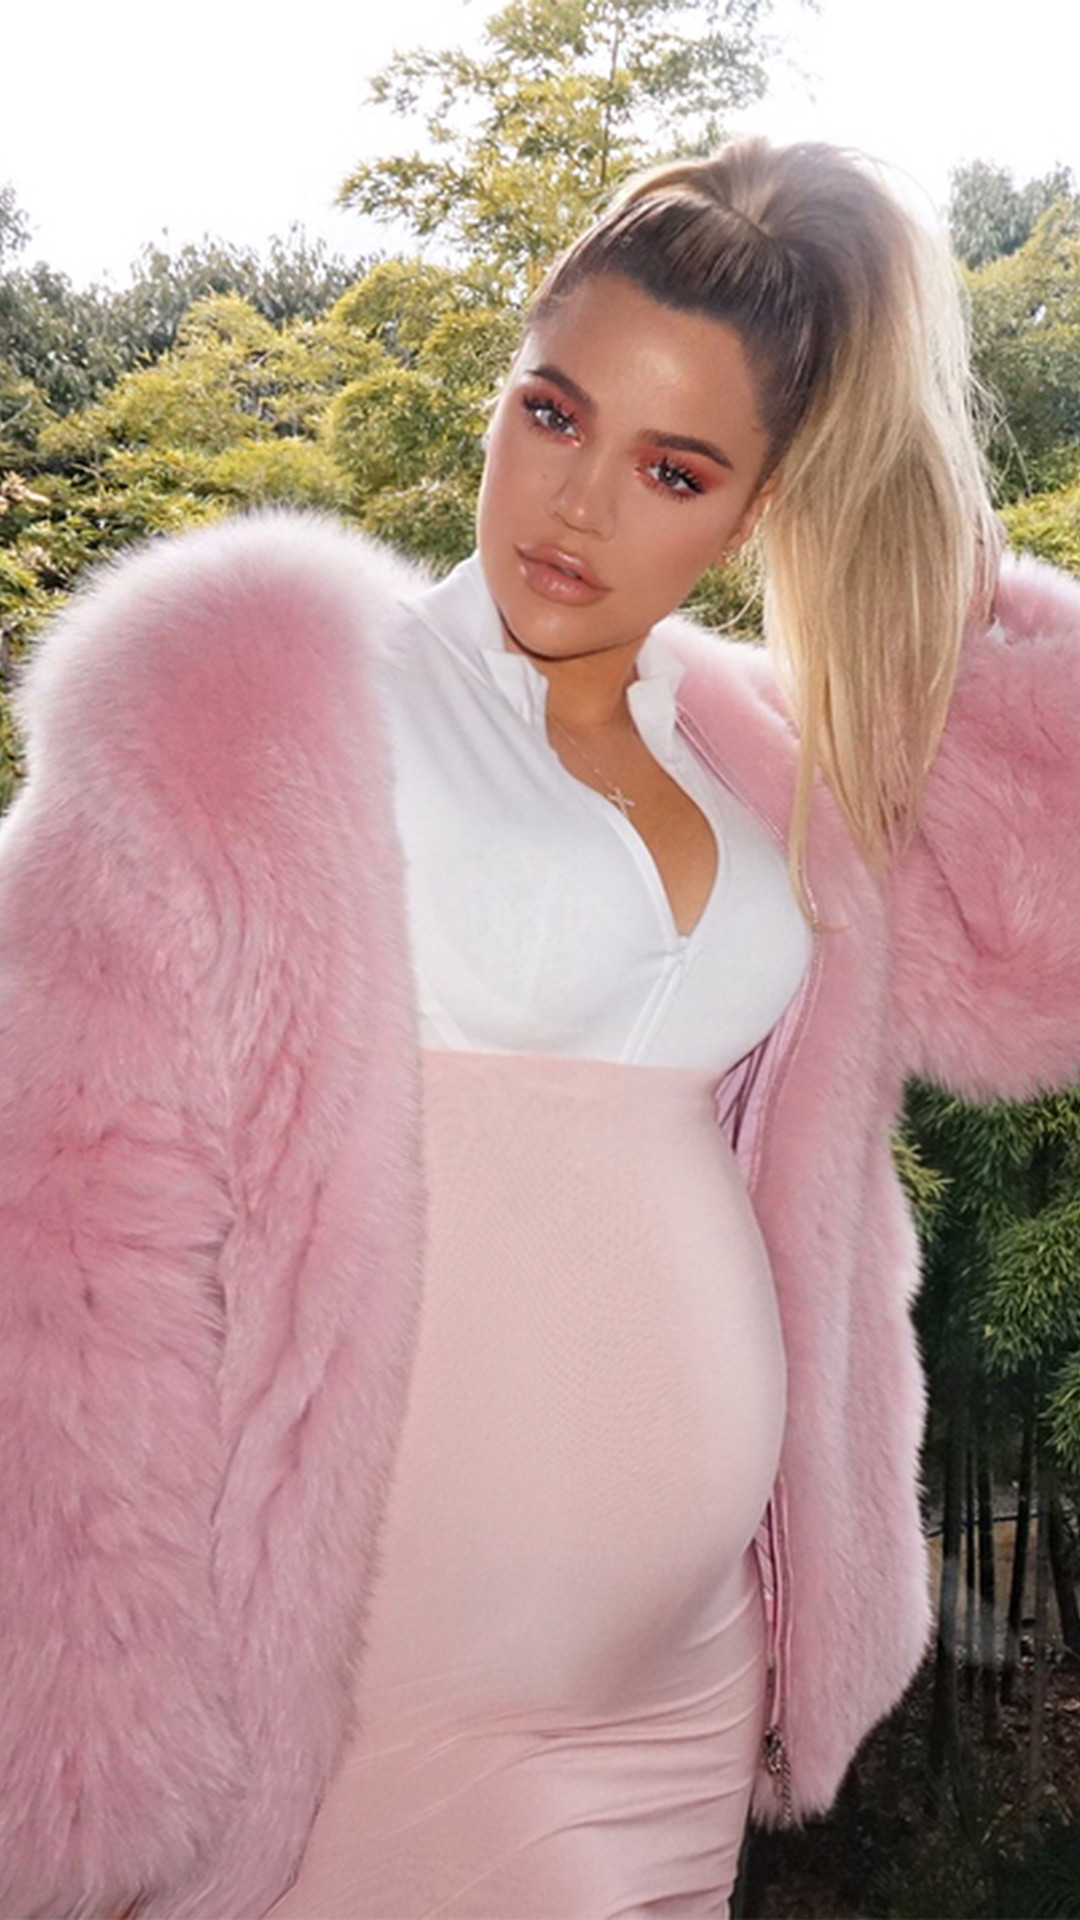 Khloe Kardashian, Baby Bump, 8 Months, Pregnant, Japan